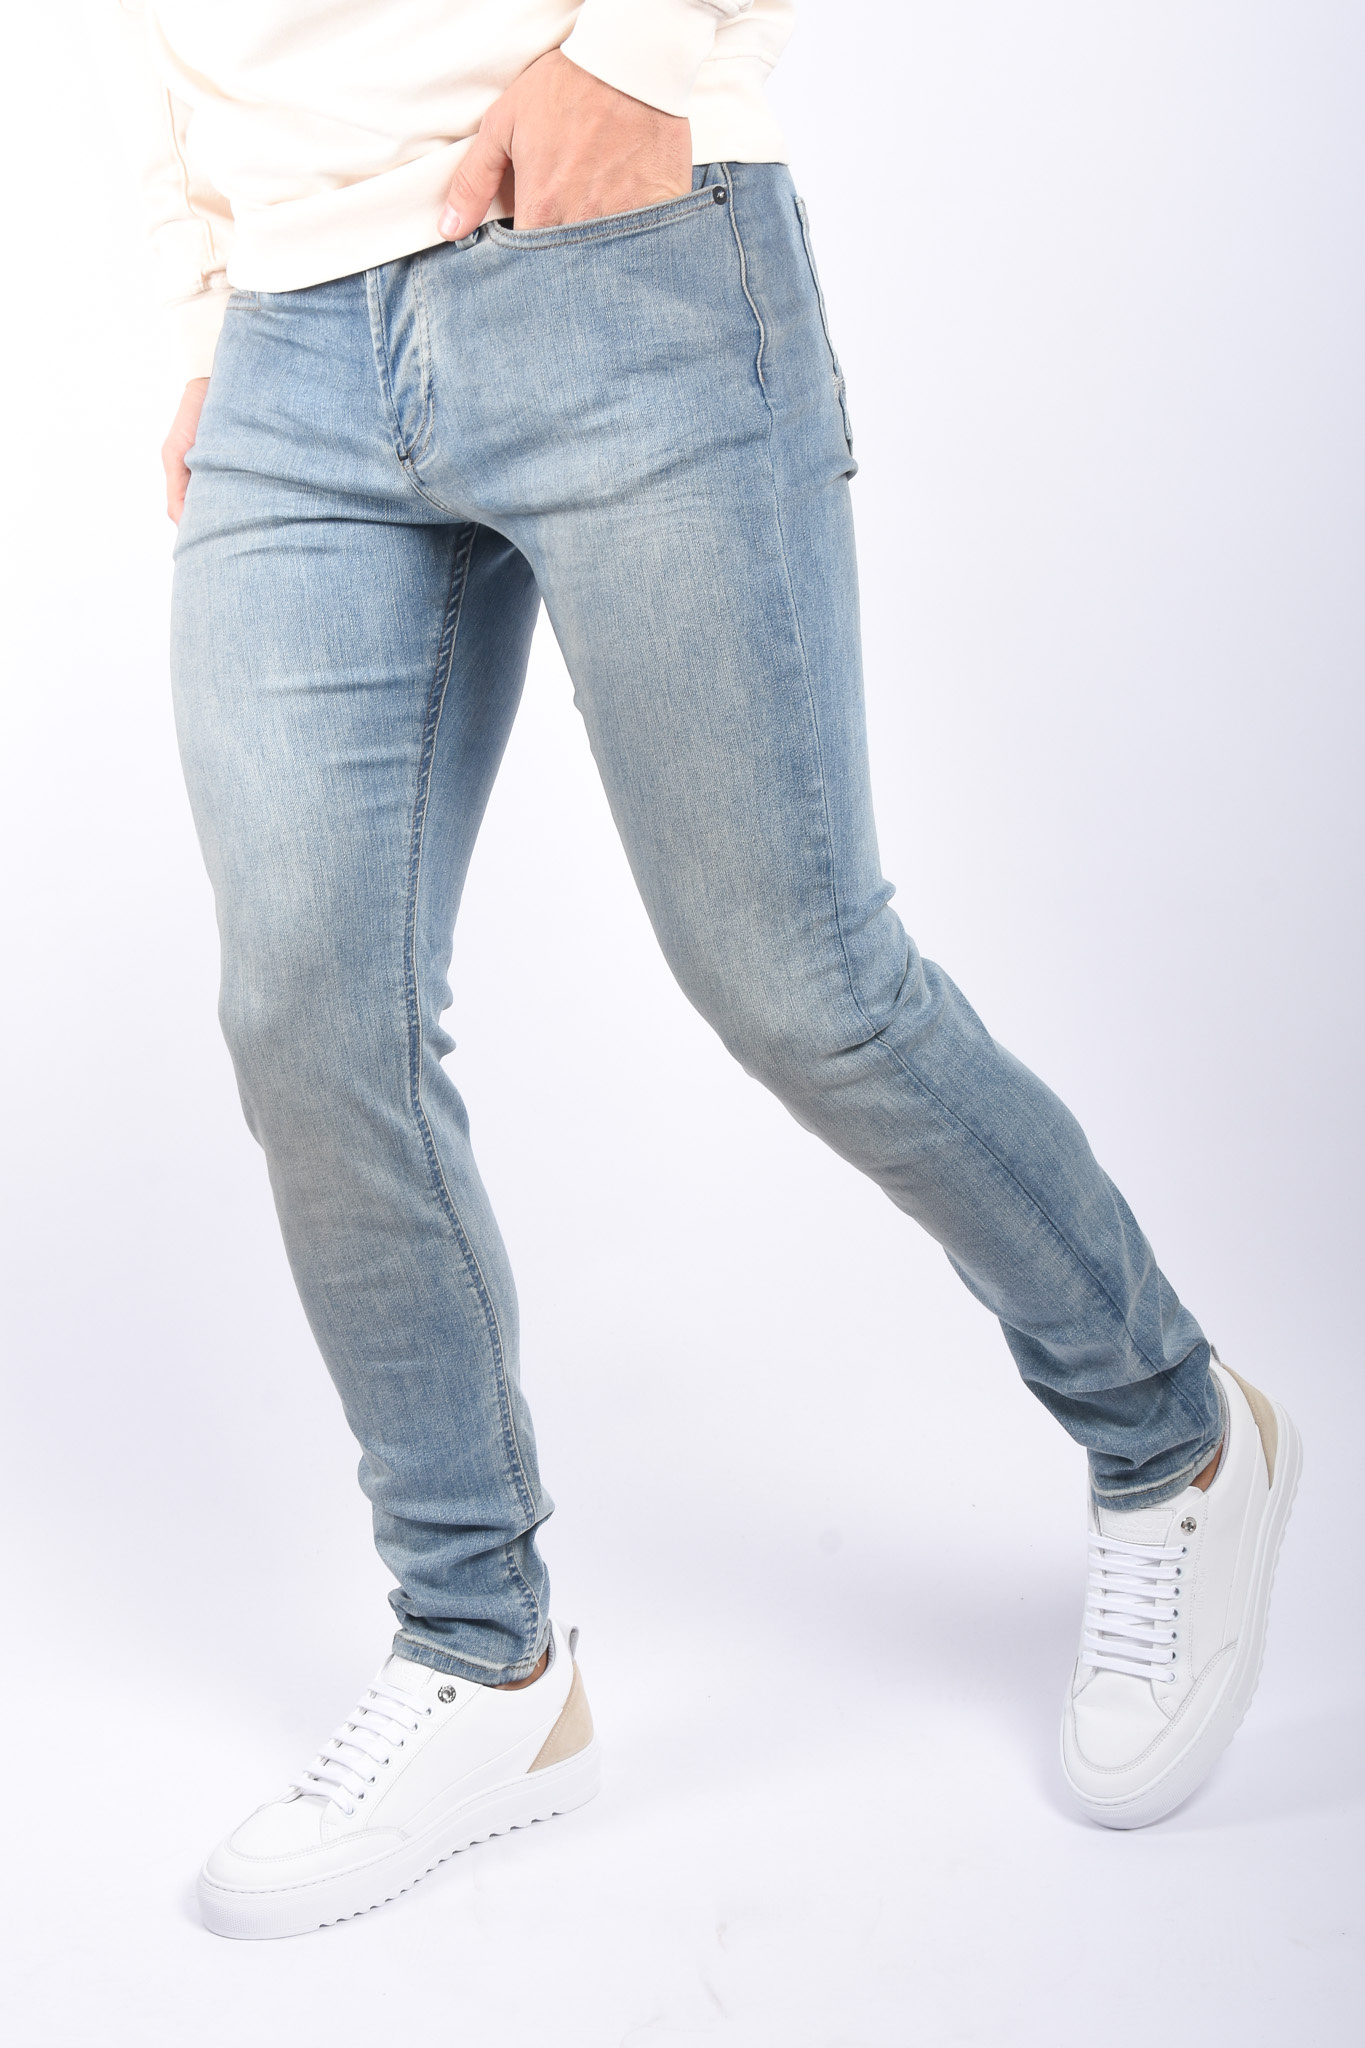 Denham SS24 - Bolt FMGSCT Skinny Fit Jeans - Mid Blue - Strictly 